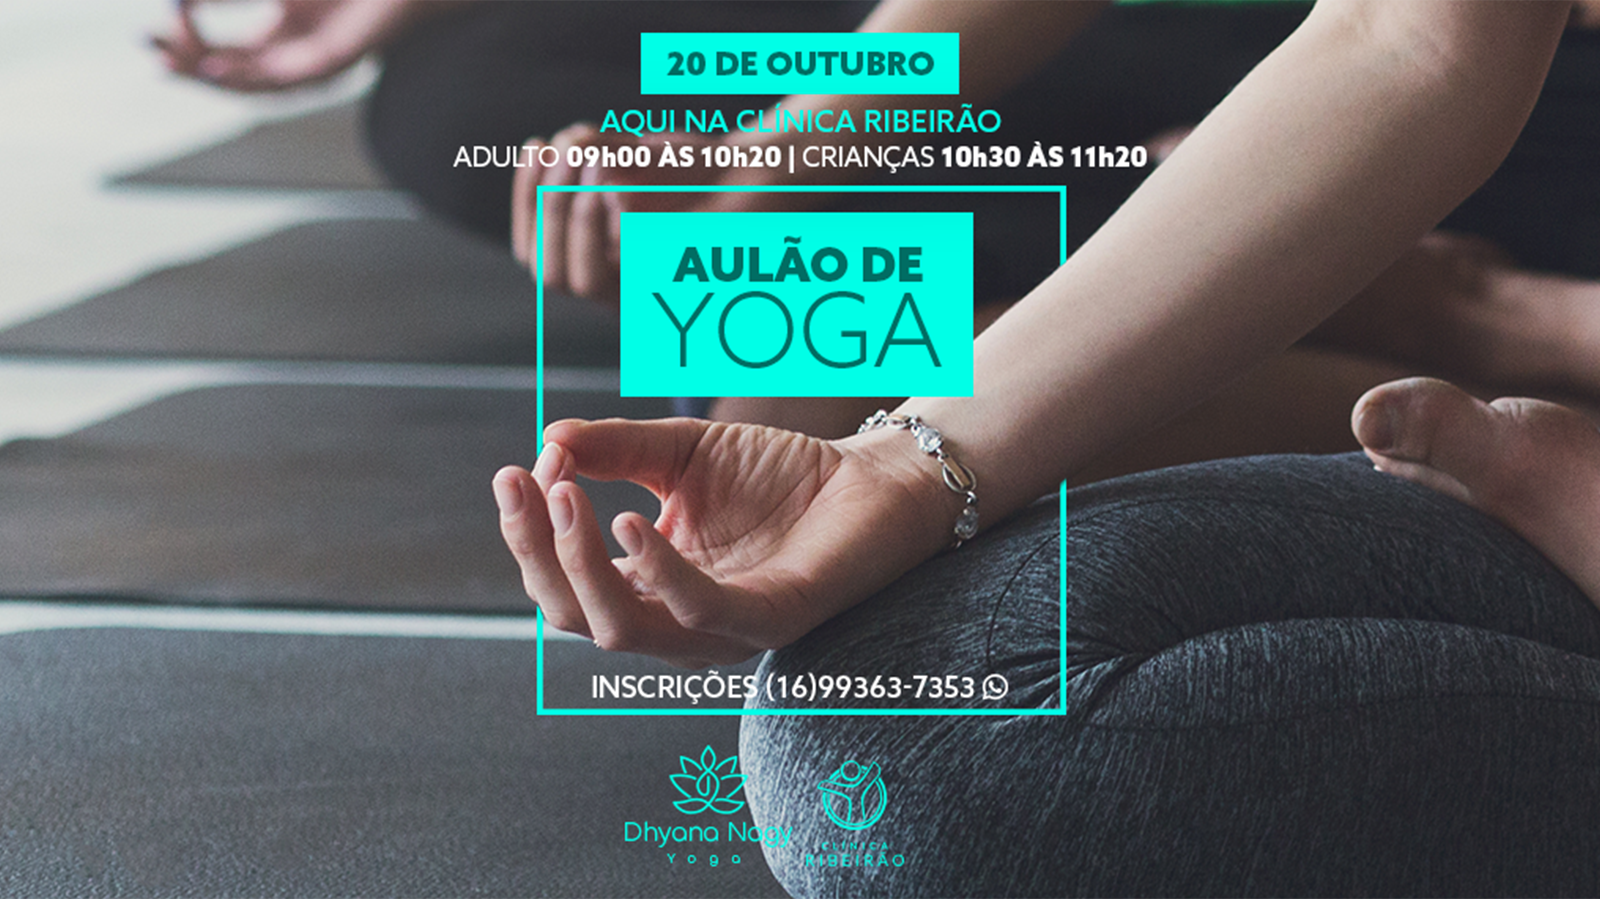 clinica_ribeira_fisioterapia_macaverdemarketing_design_publicidade_agencia_propaganda_digital_campanha_yoga2